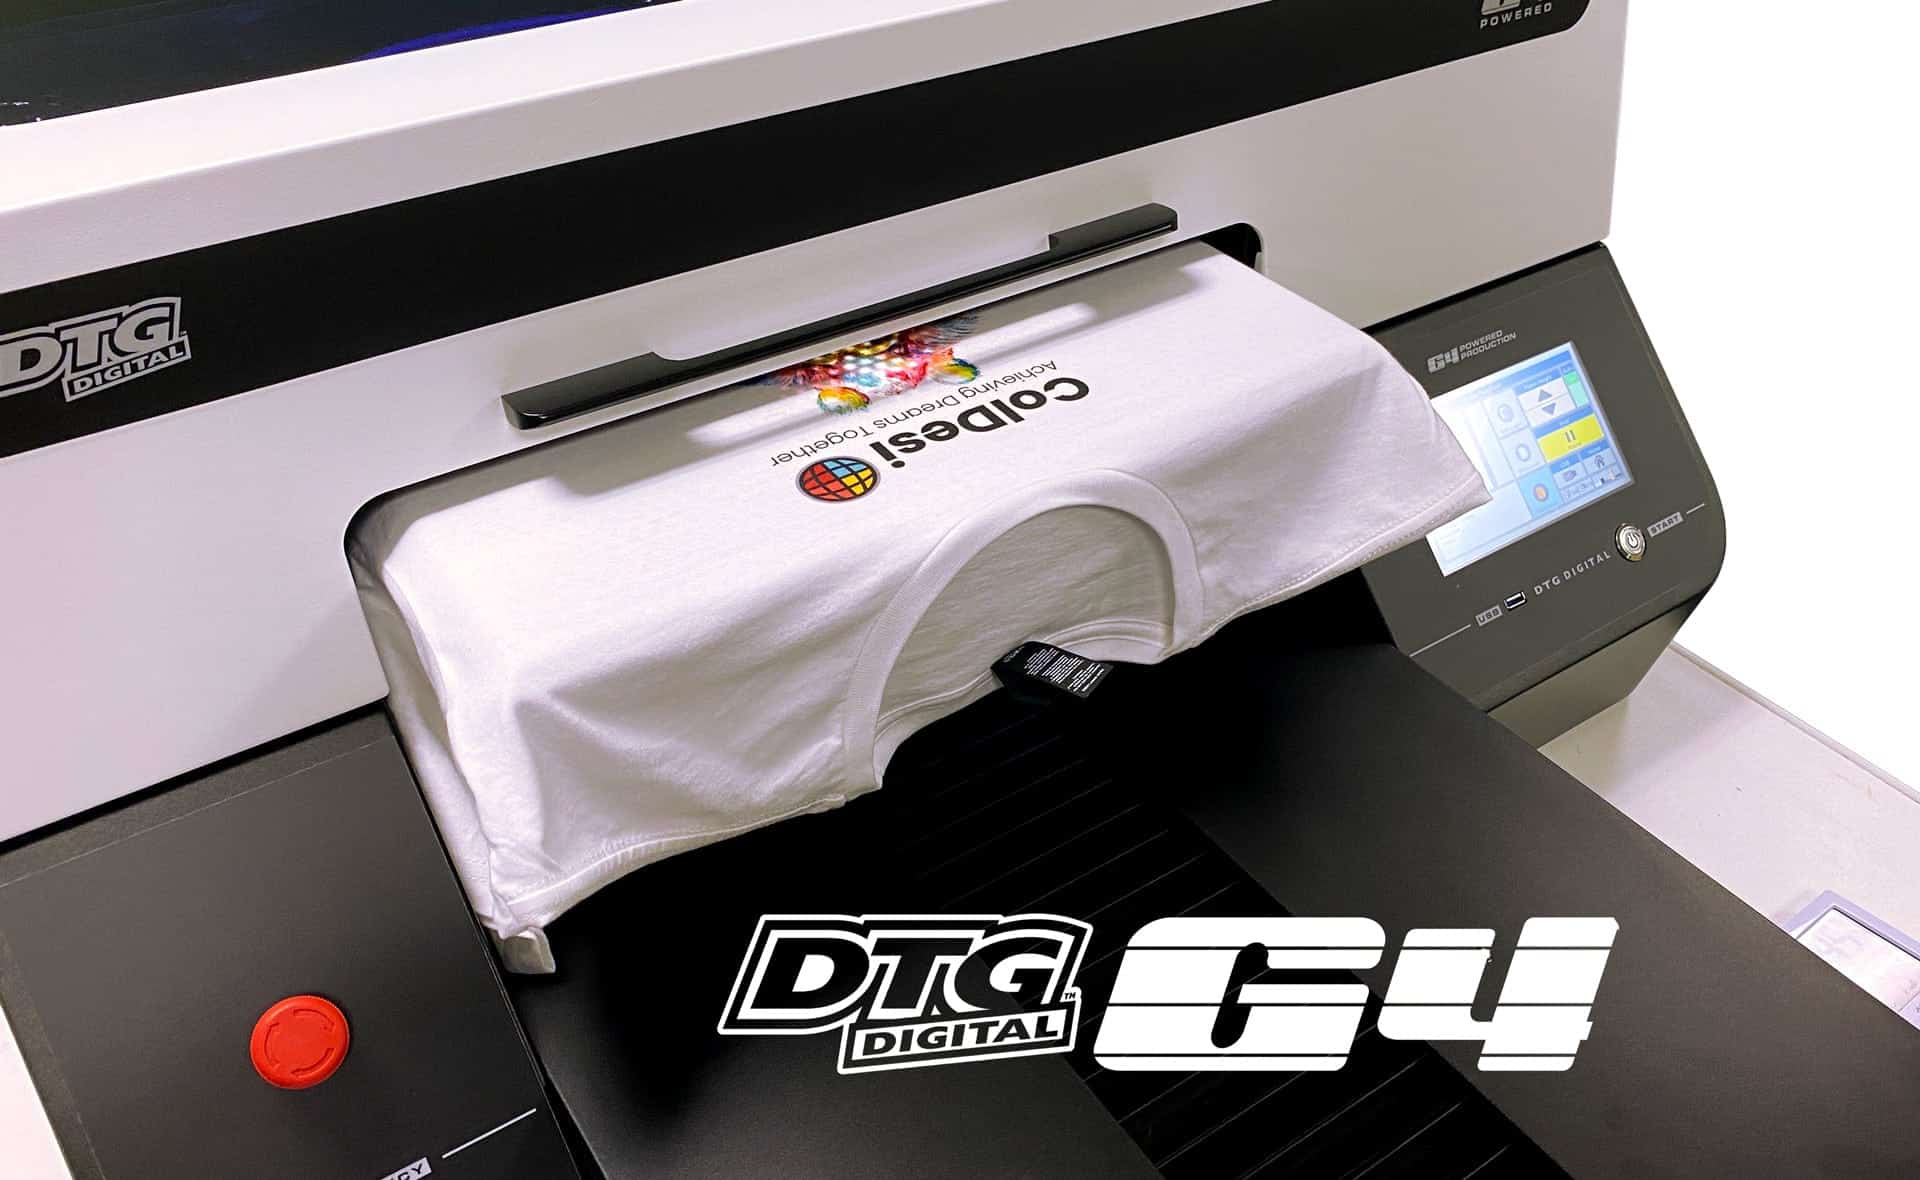 DOMSEM Full-automation DTG Printer T-shirt Garment Cloth Printer CMYK+WWWW  A3 Size Printing Machine DX5 Head Free T-shirt tray